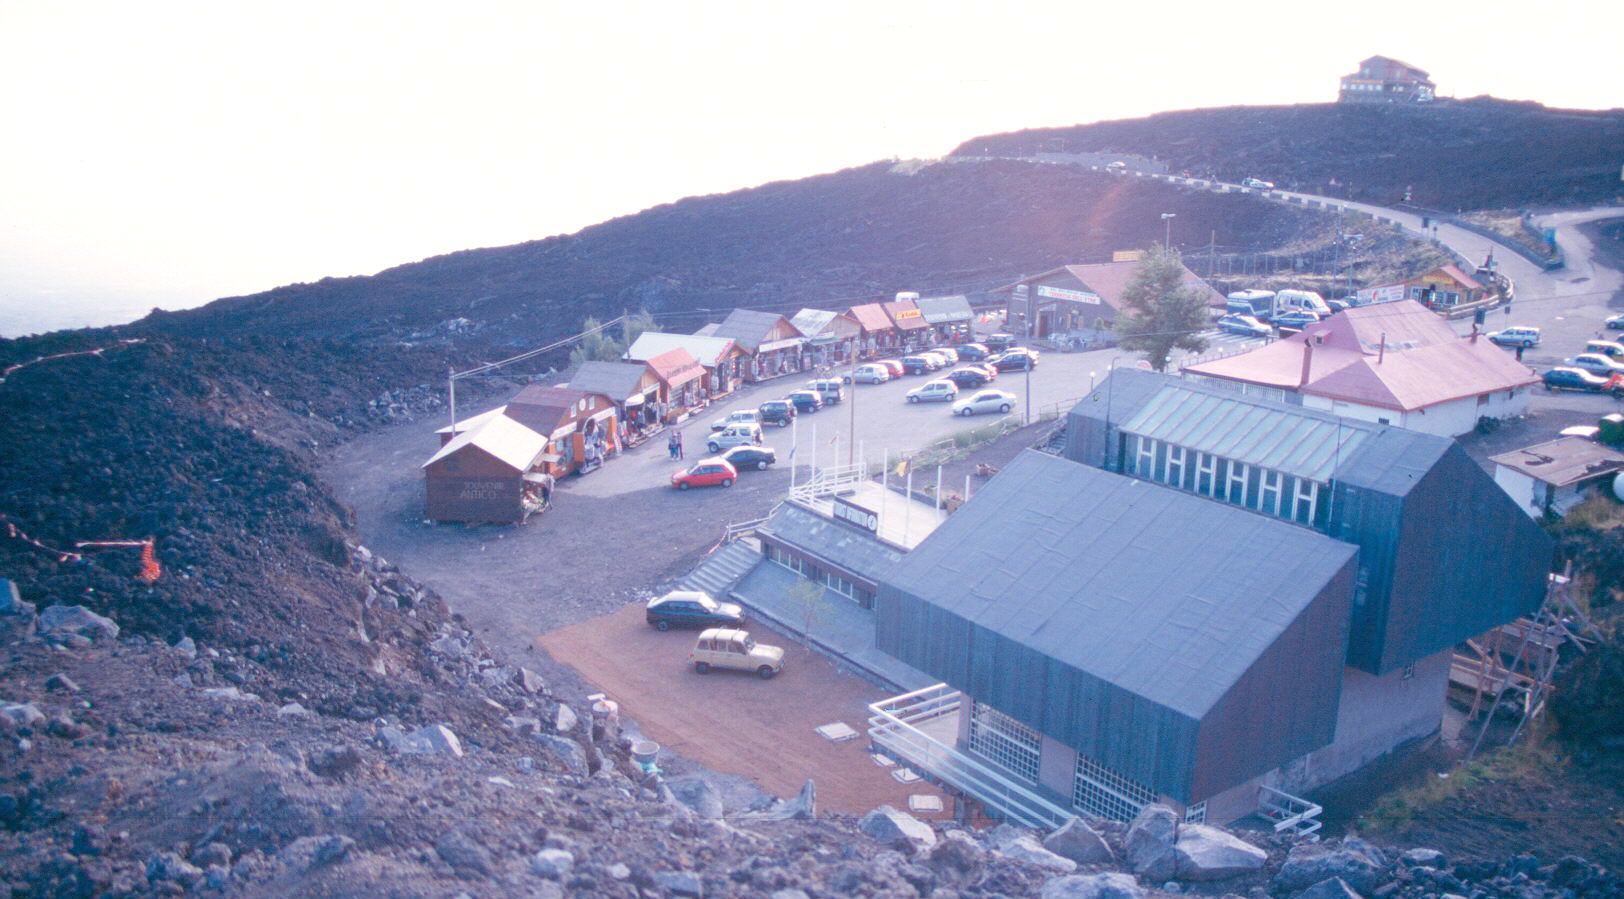 2001. Área recreativa protegida por murallas de lava